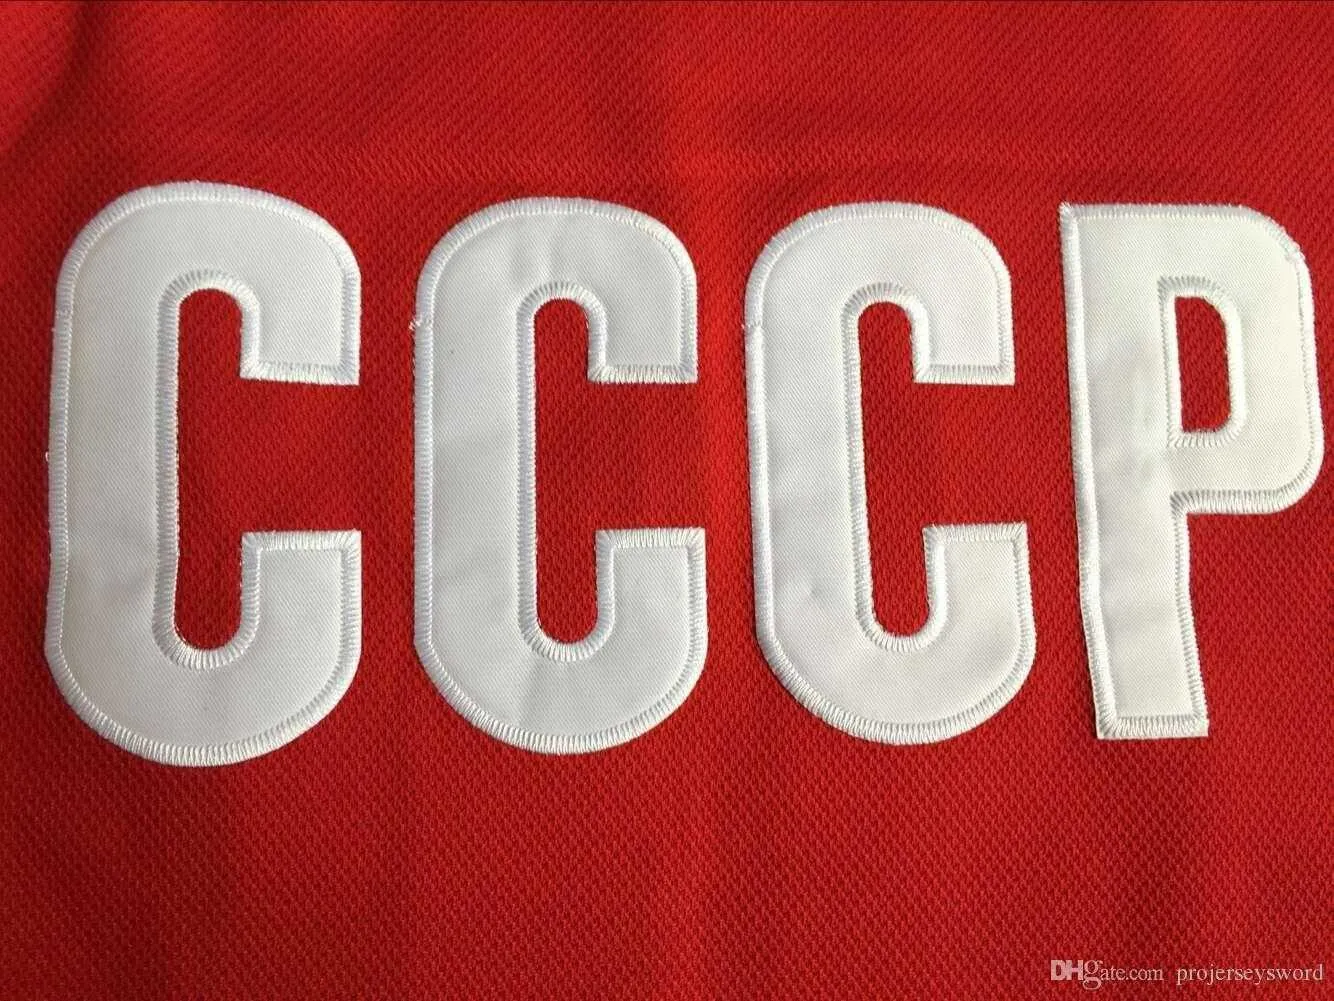 1980 CCCP Russia Hockey Jersey 10 Alexander Maltsev 14 Zinetula Bilyaletdinov 20 Vladislav Tretiak Hockey Jerseys 